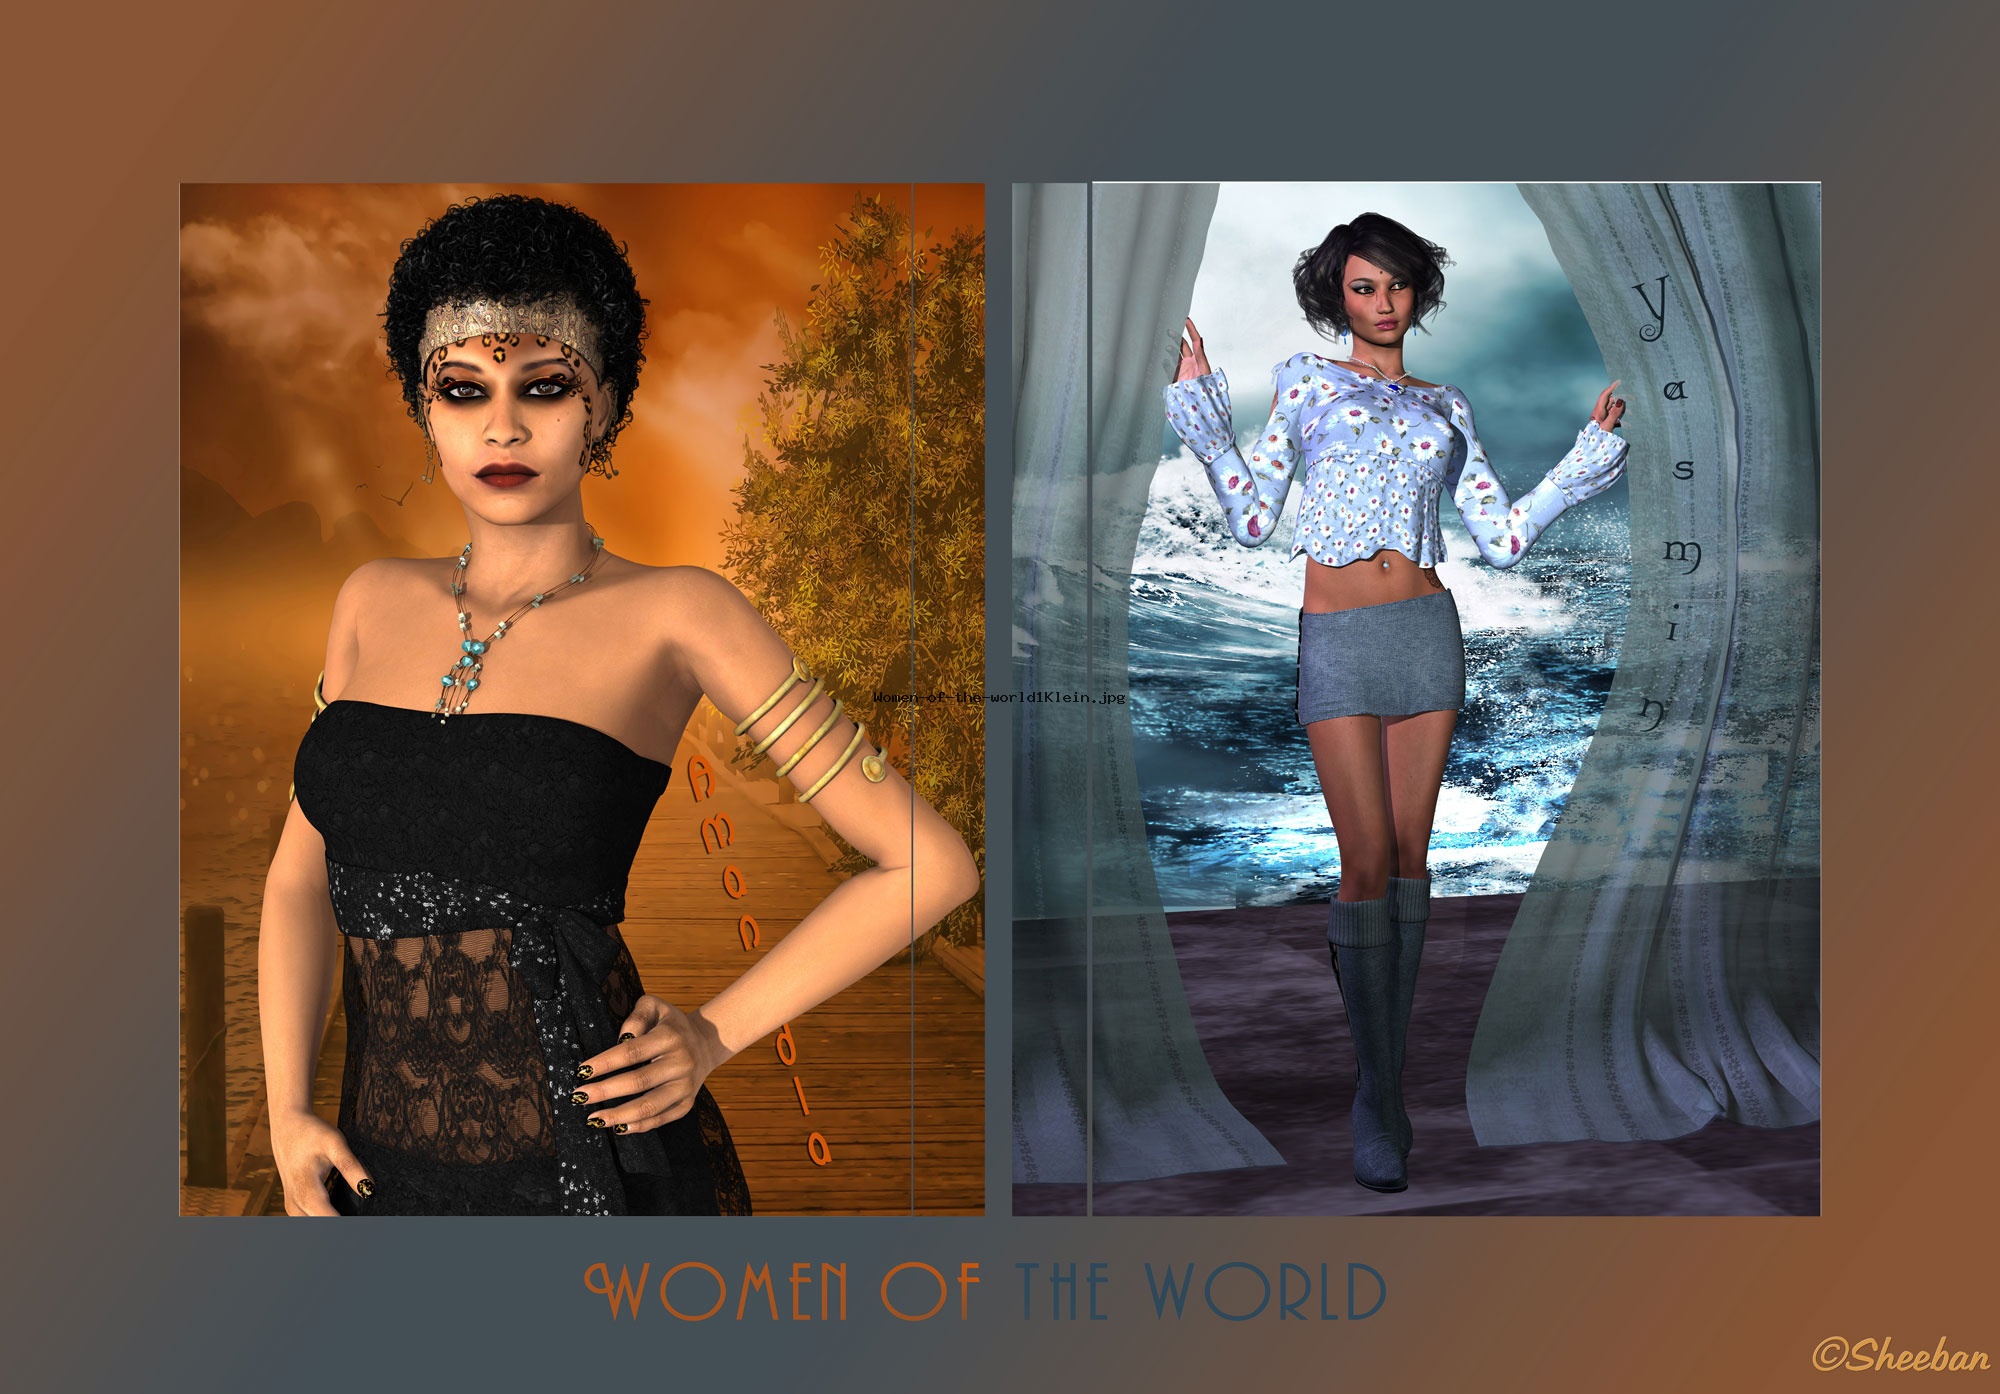 Women of the world Pt. 1 - Amandla and Yasmin